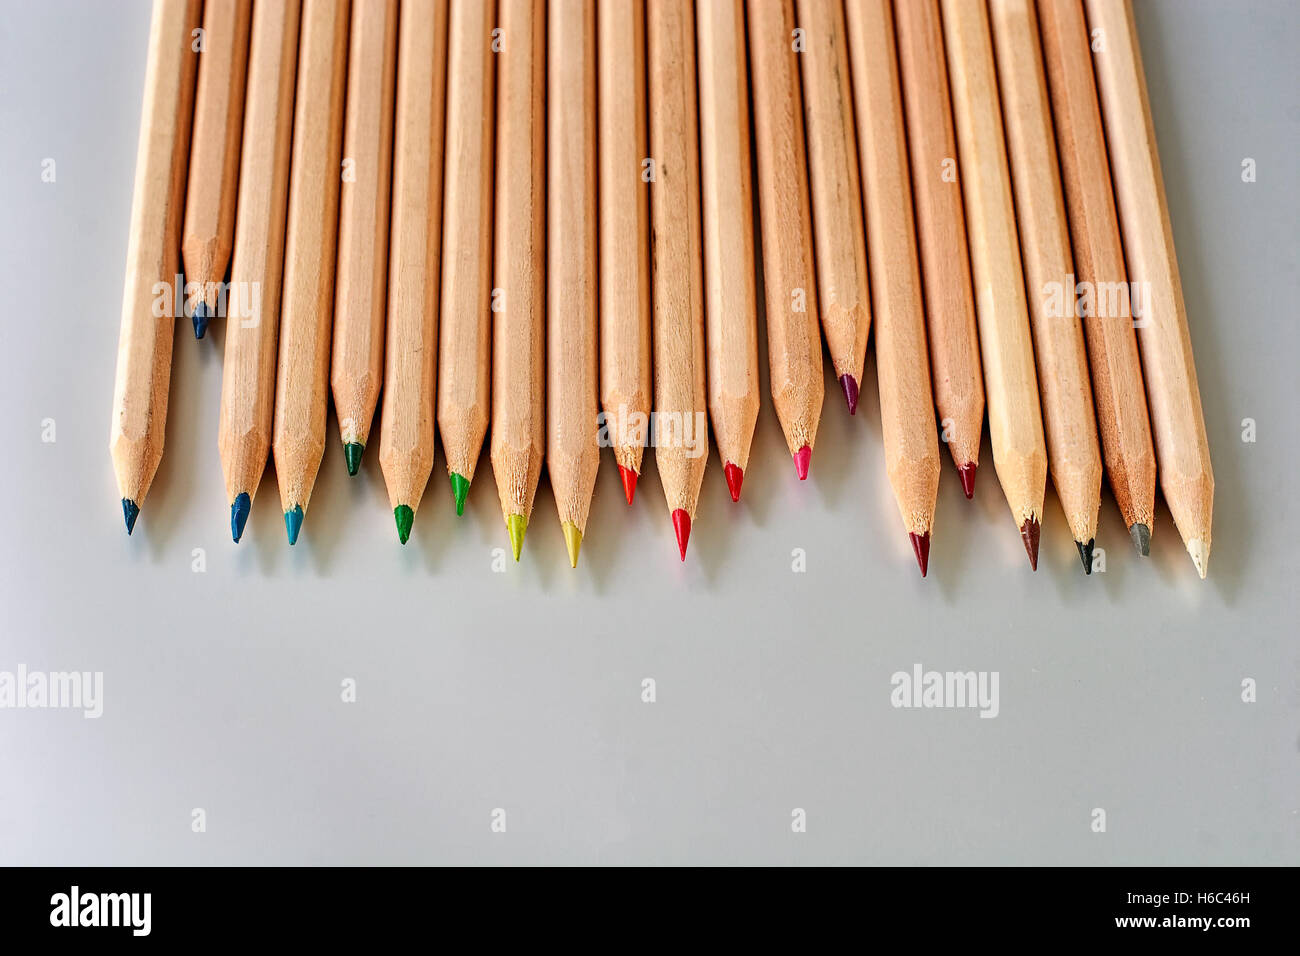 Fila escalonada de madera natural de lápices de colores Foto de stock